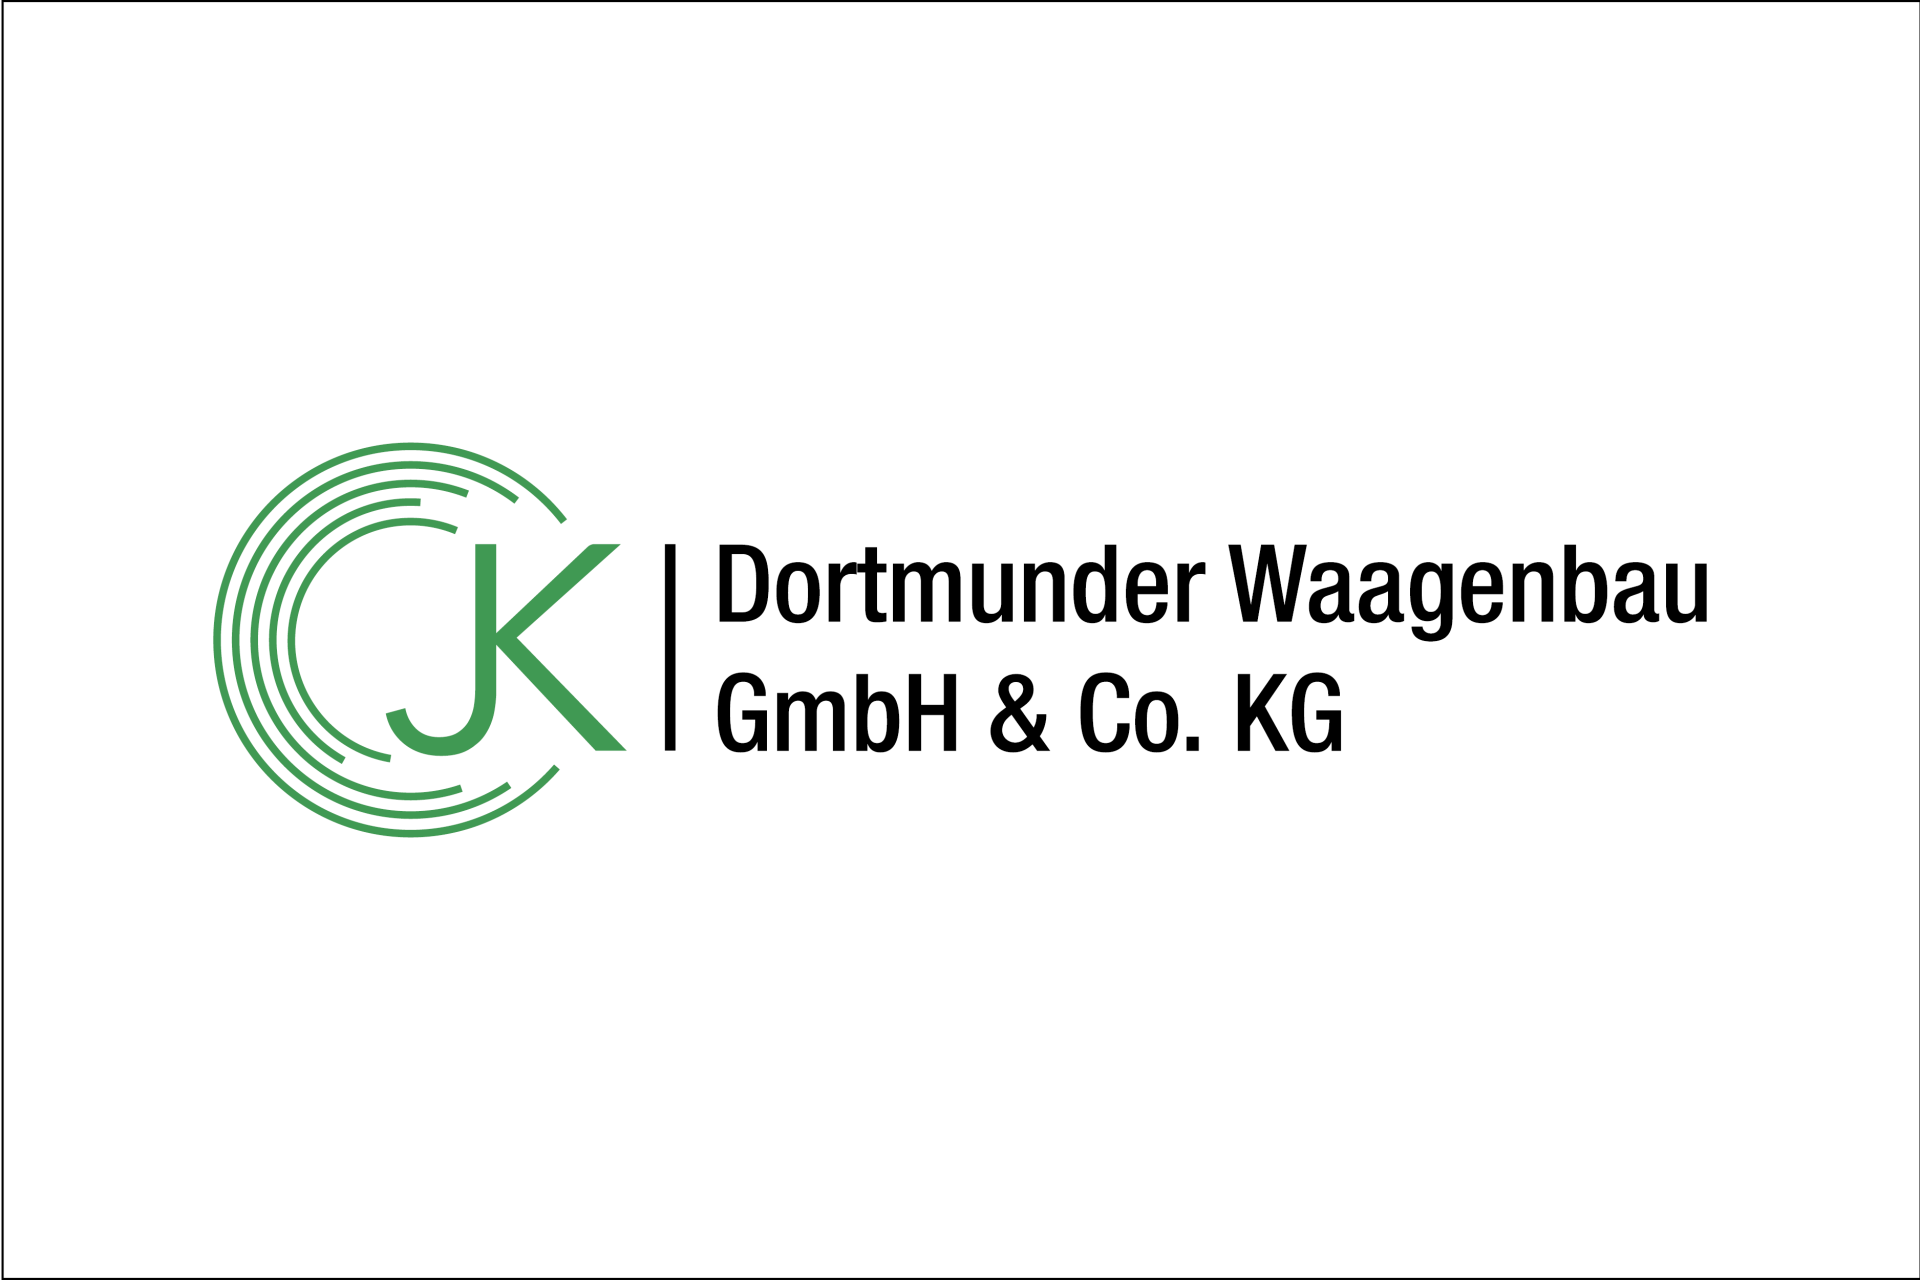 Dortmunder Waagenbau GmbH & Co. KG